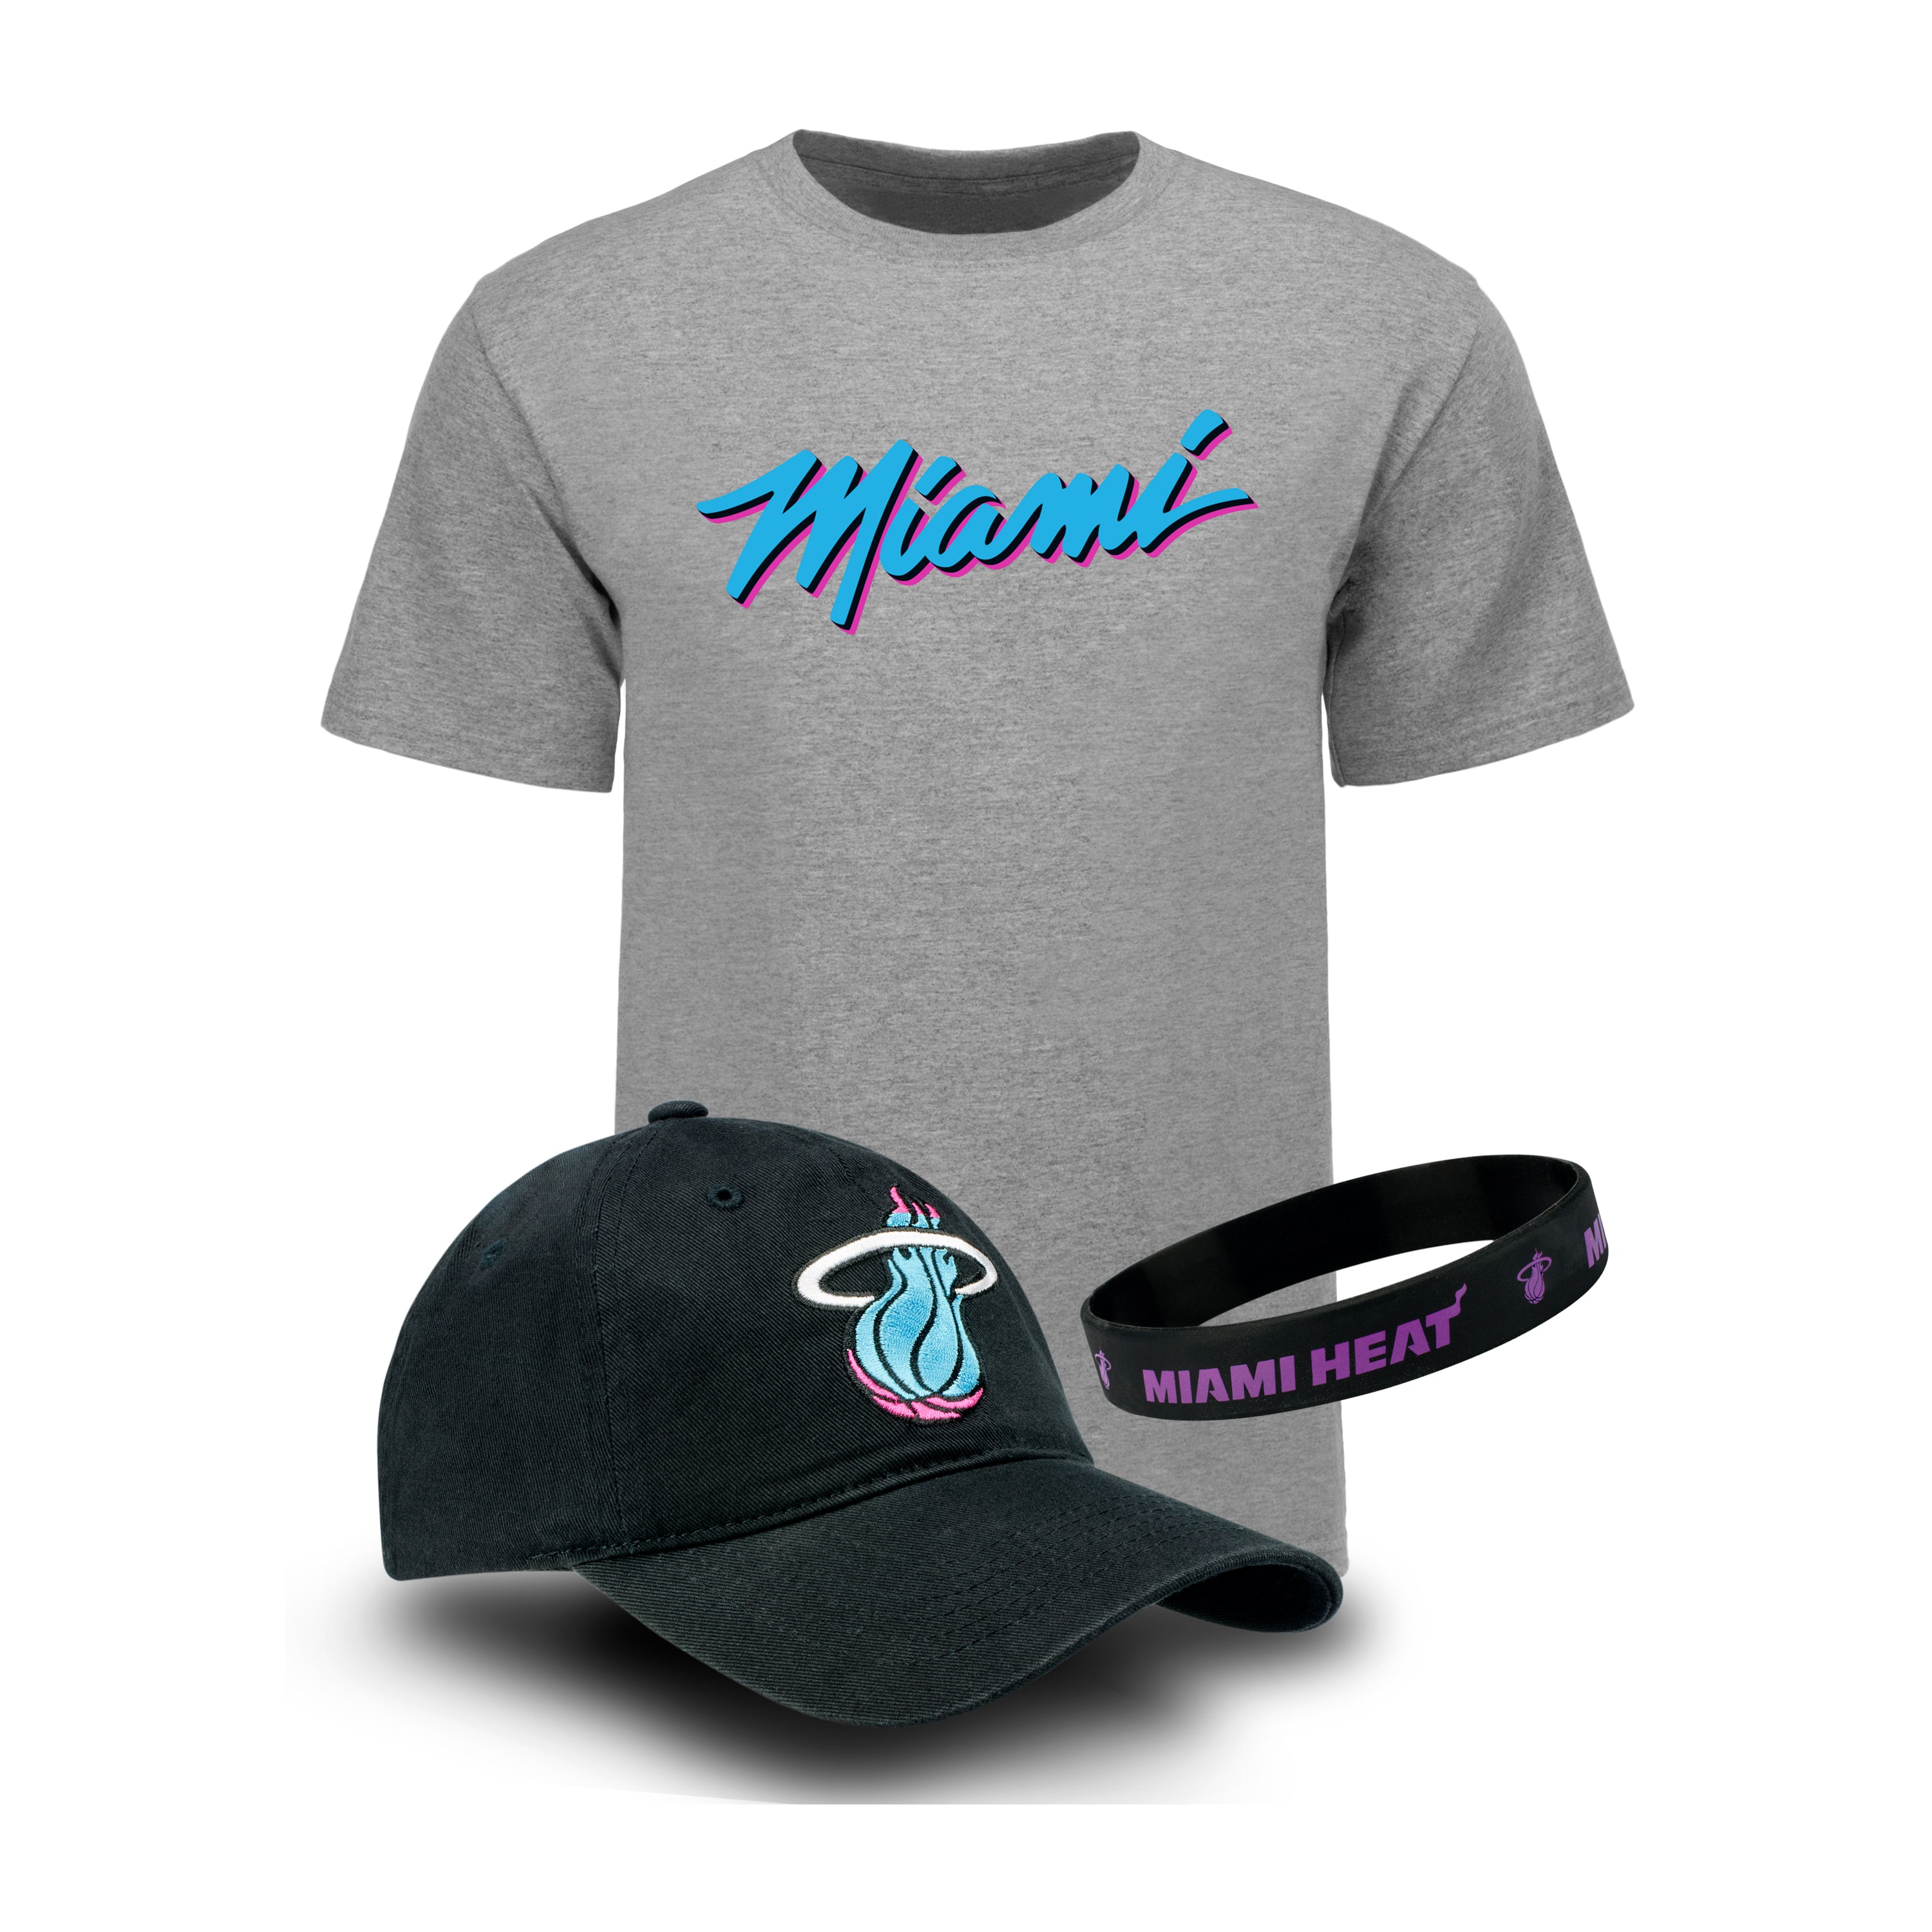 Miami HEAT Vice Nights Youth Hat/Tee 